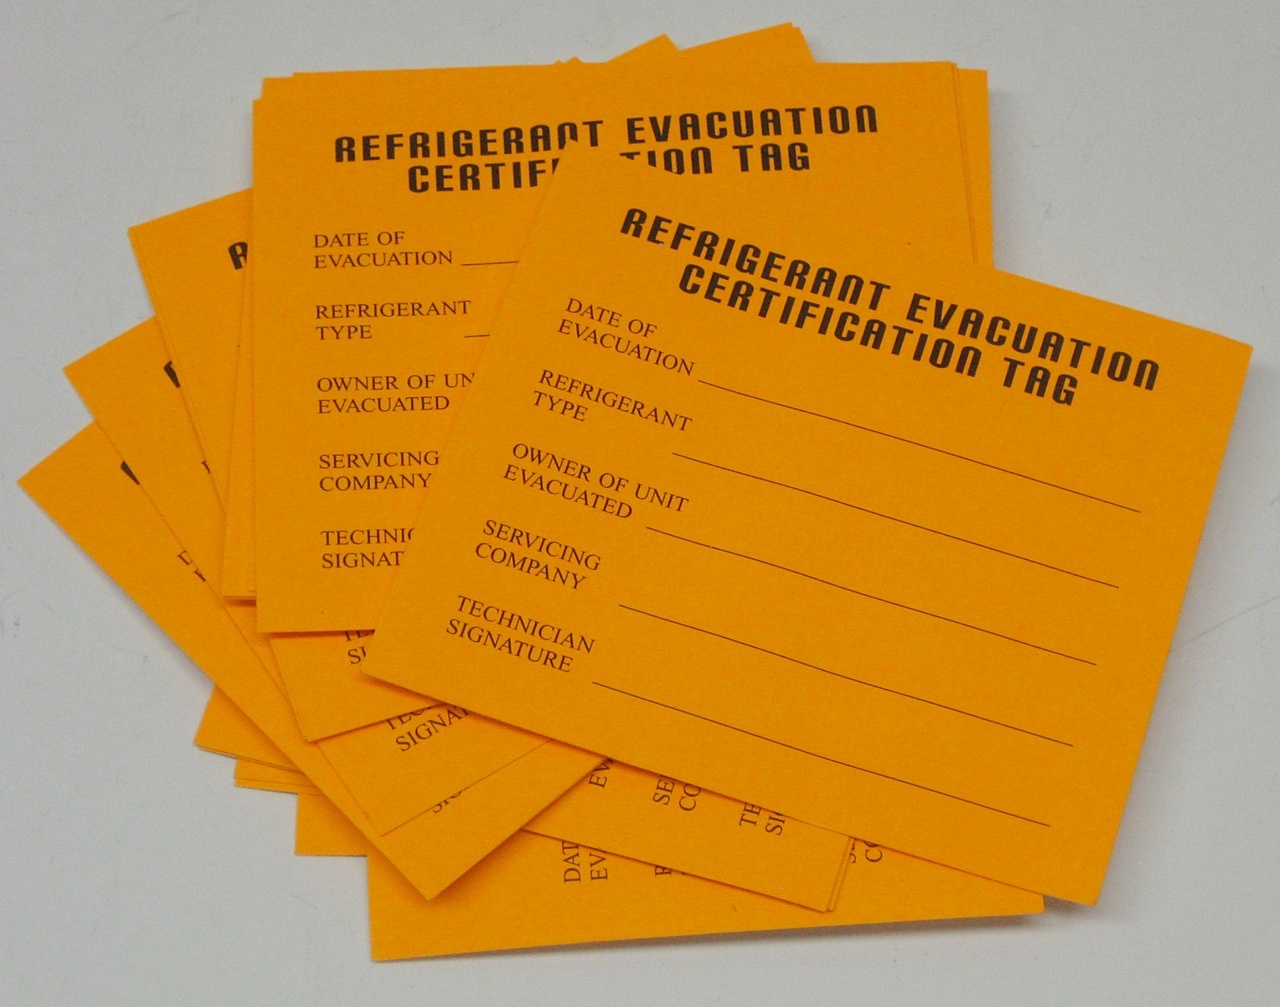 Evacuation certification tags (C-Tags)